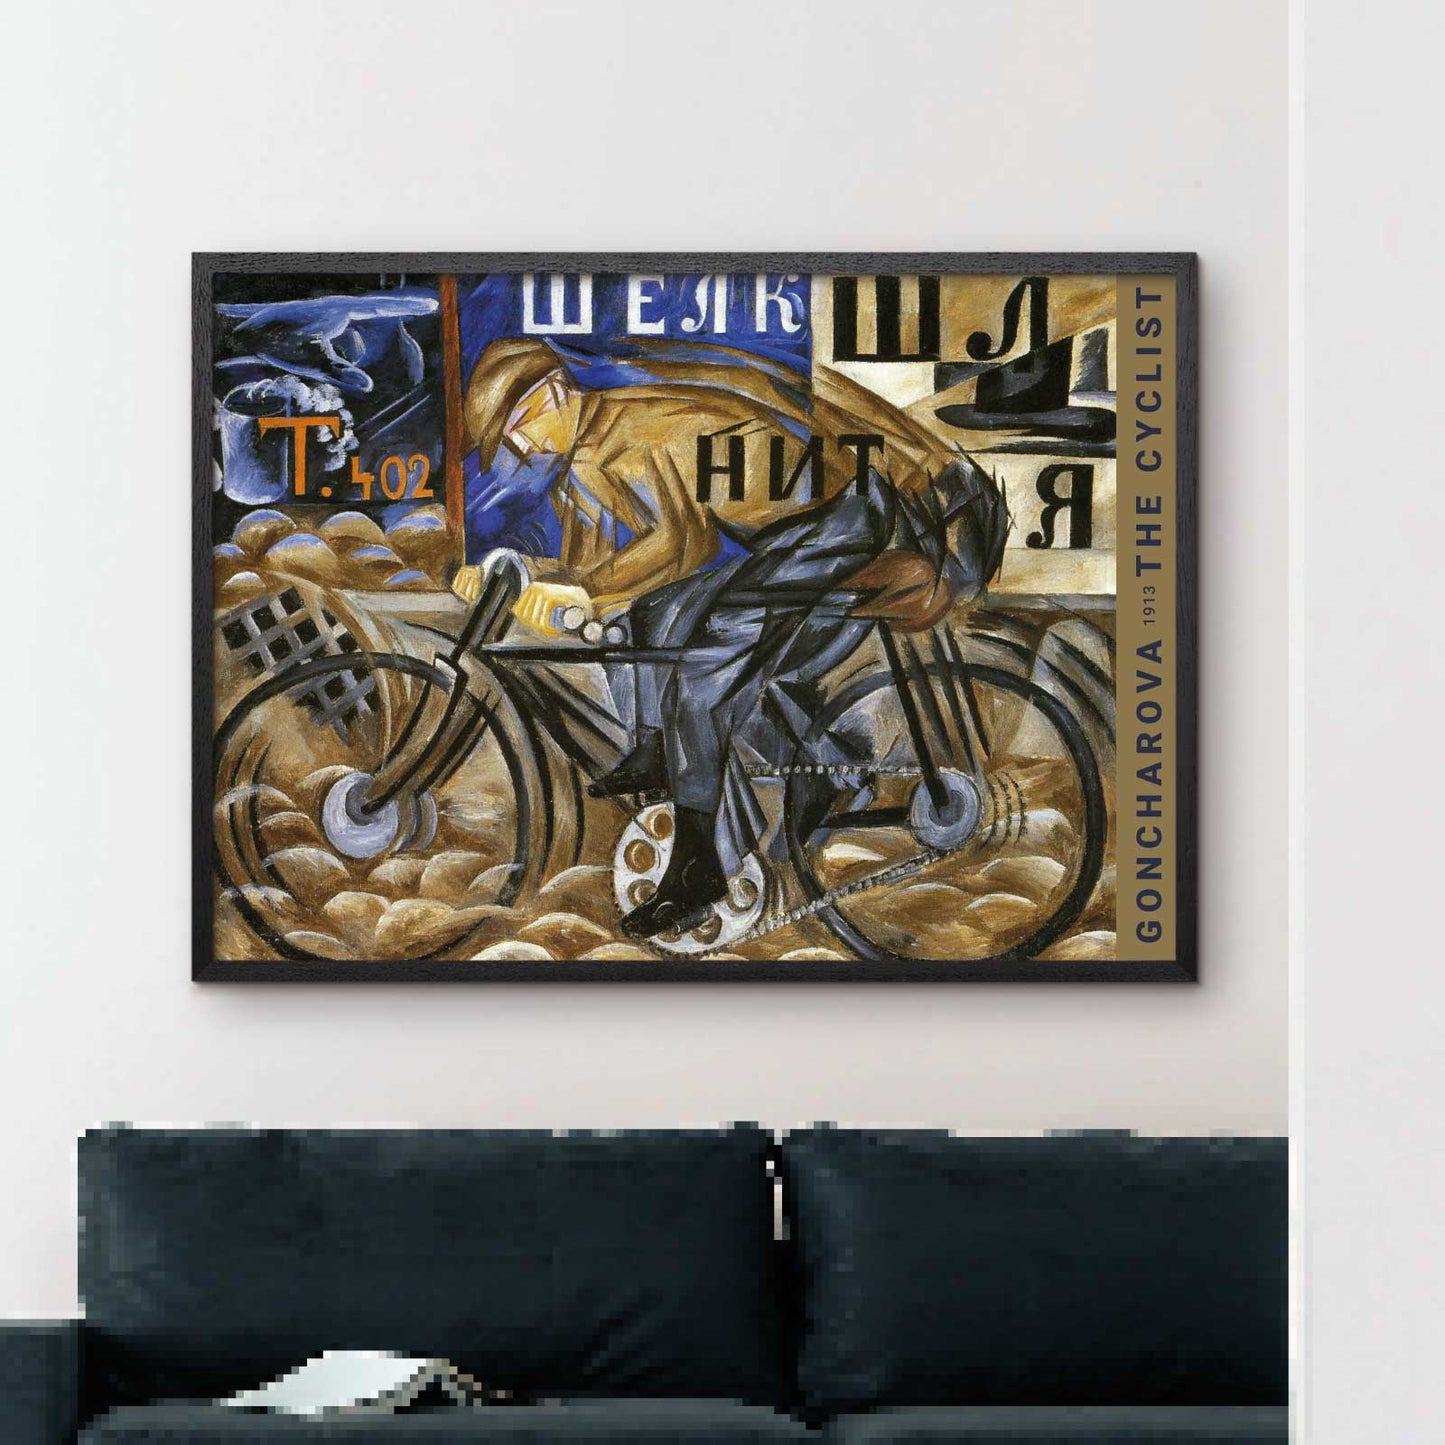 Art poster featuring Natalia Goncharova "The Cyclist"